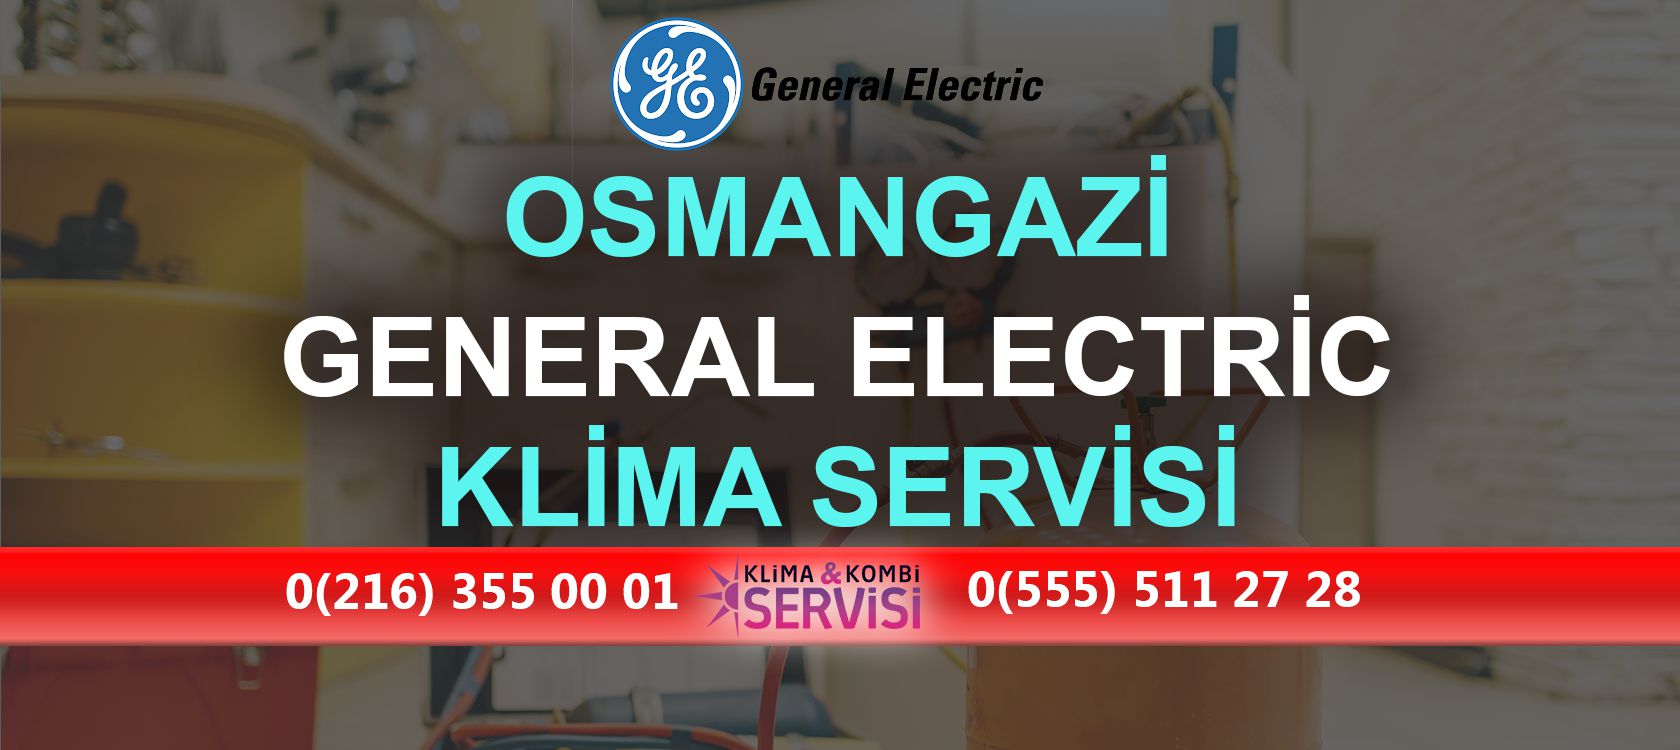 Osmangazi General Electric Klima Servisi